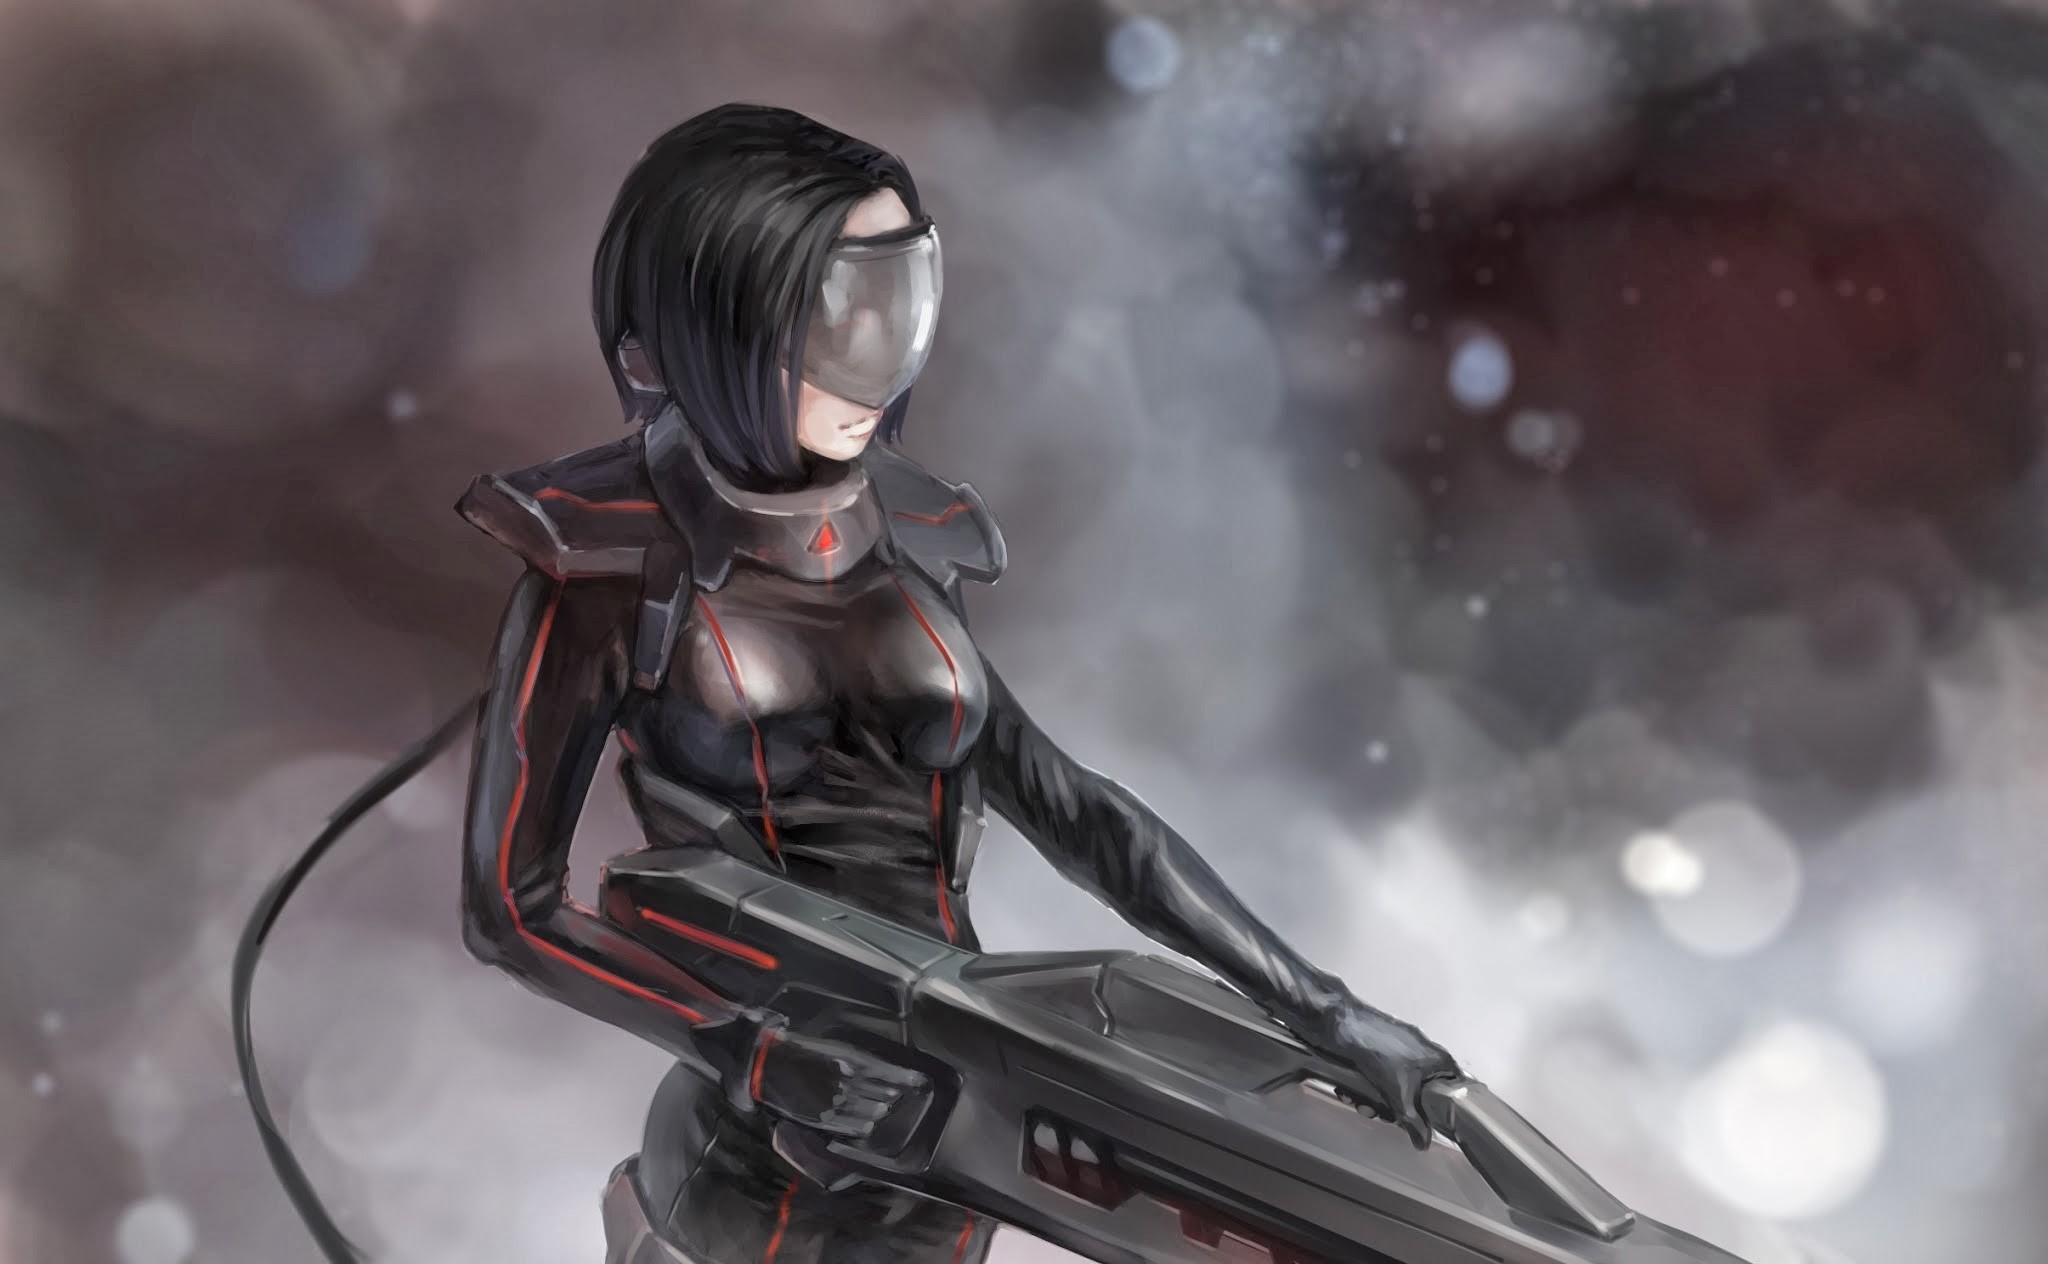 General 2048x1264 cyberpunk science fiction women girls with guns dark hair weapon science fiction women